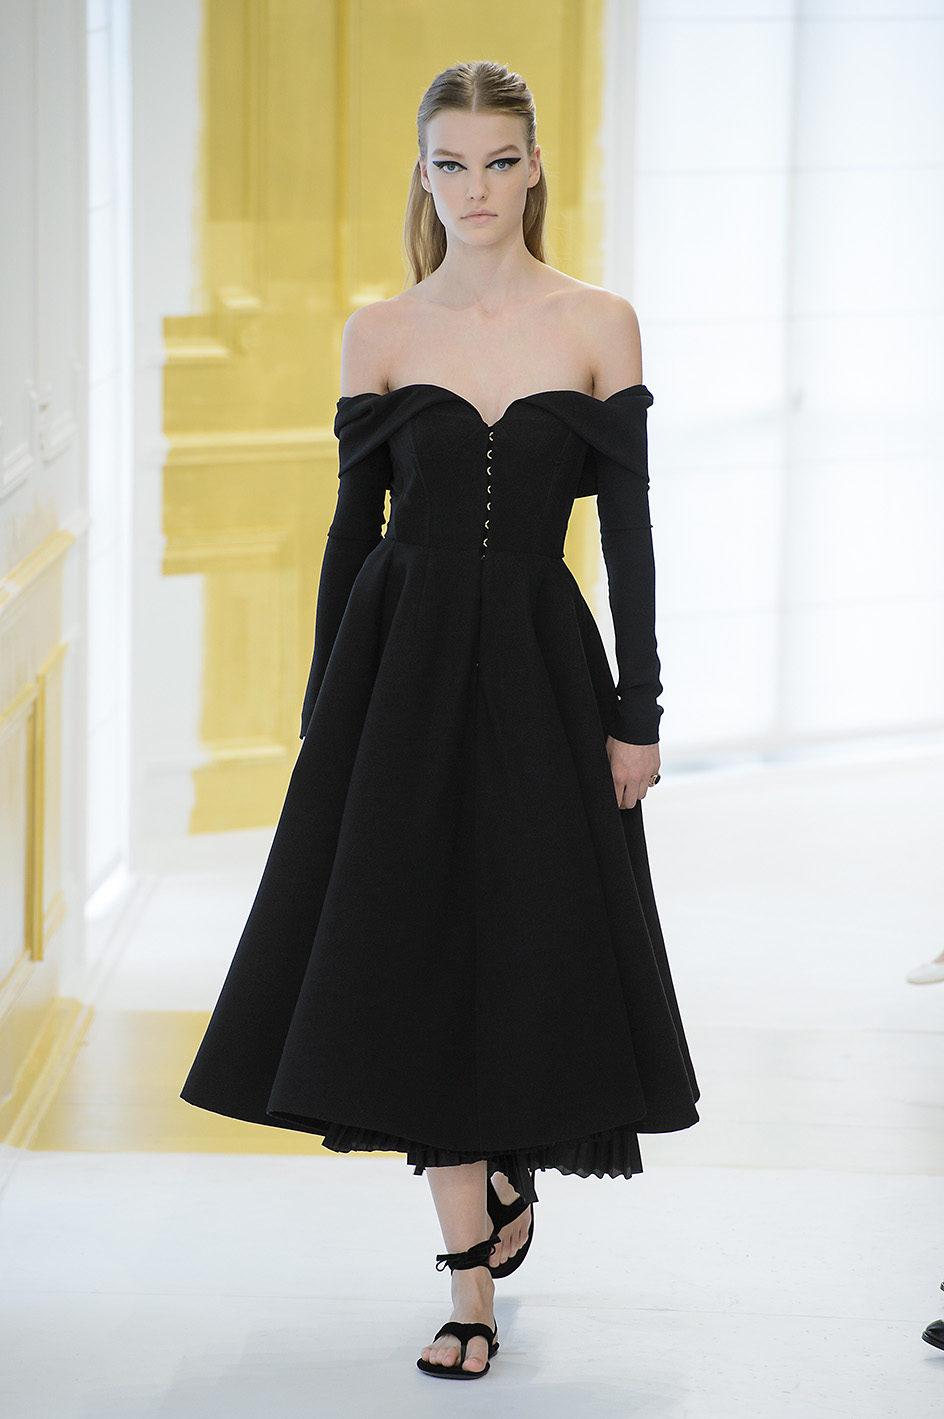 Paris Haute Couture AW 2016-2017

Christian Dior